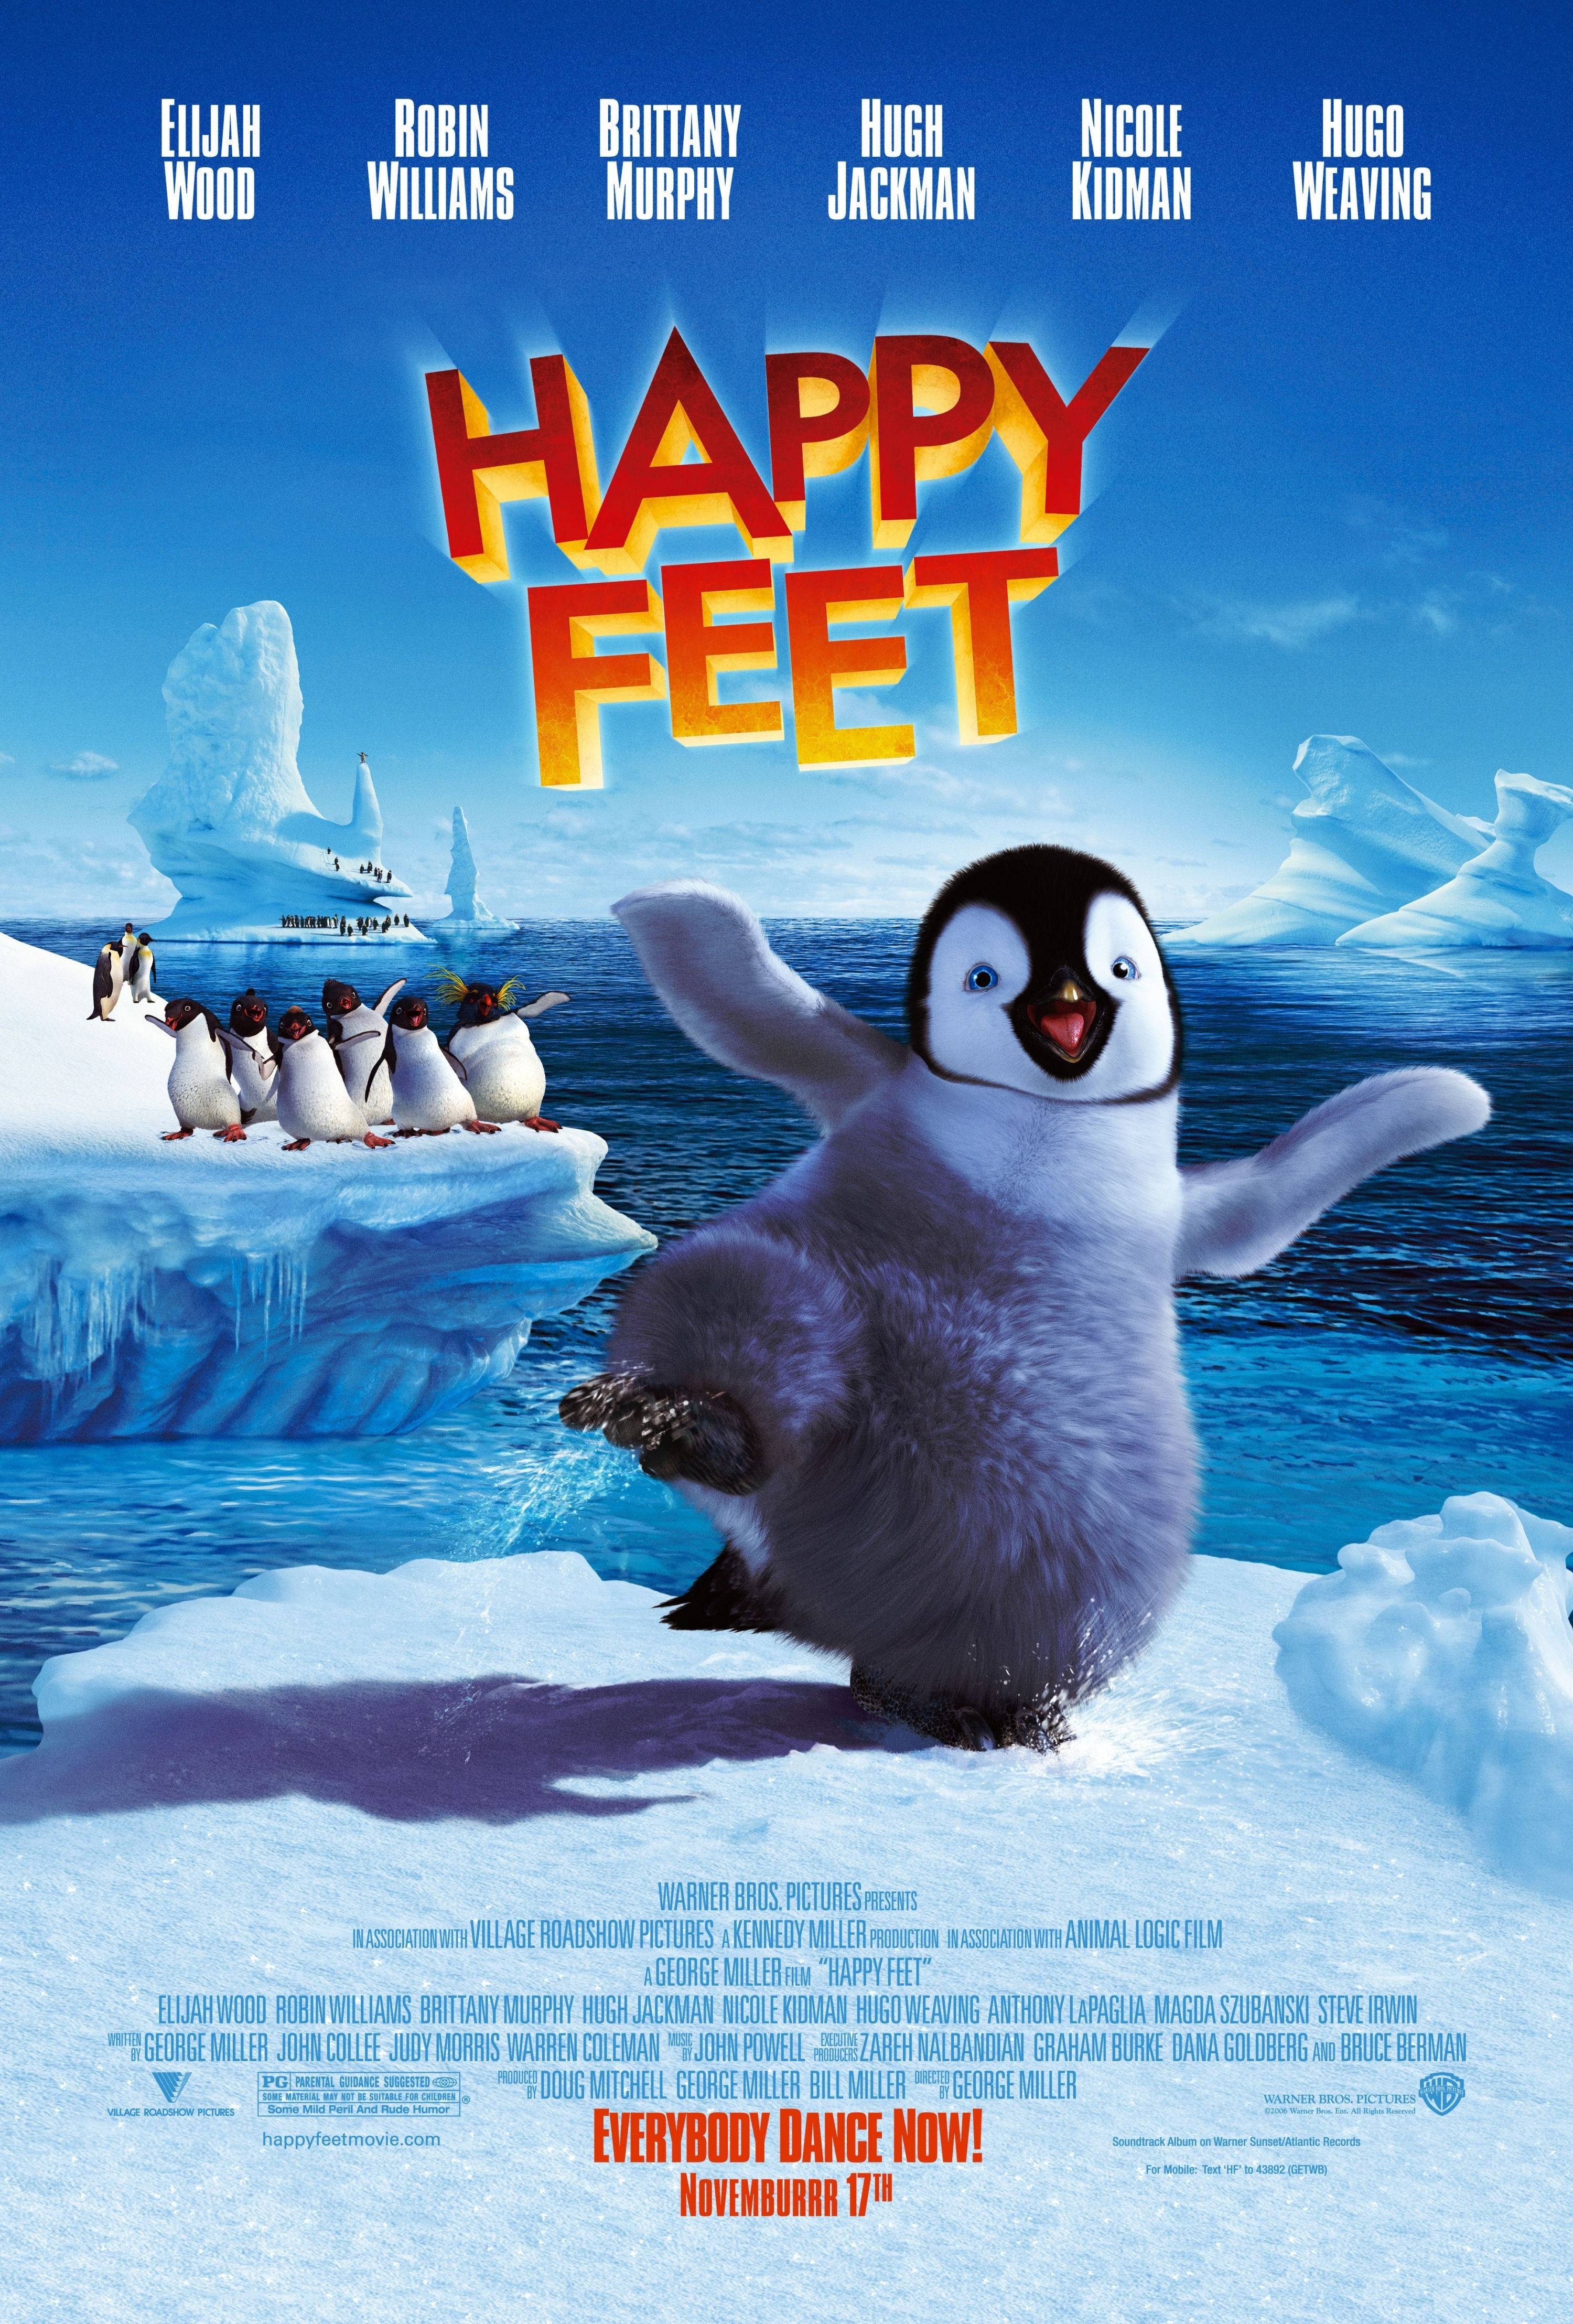 School screening: Happy Feet